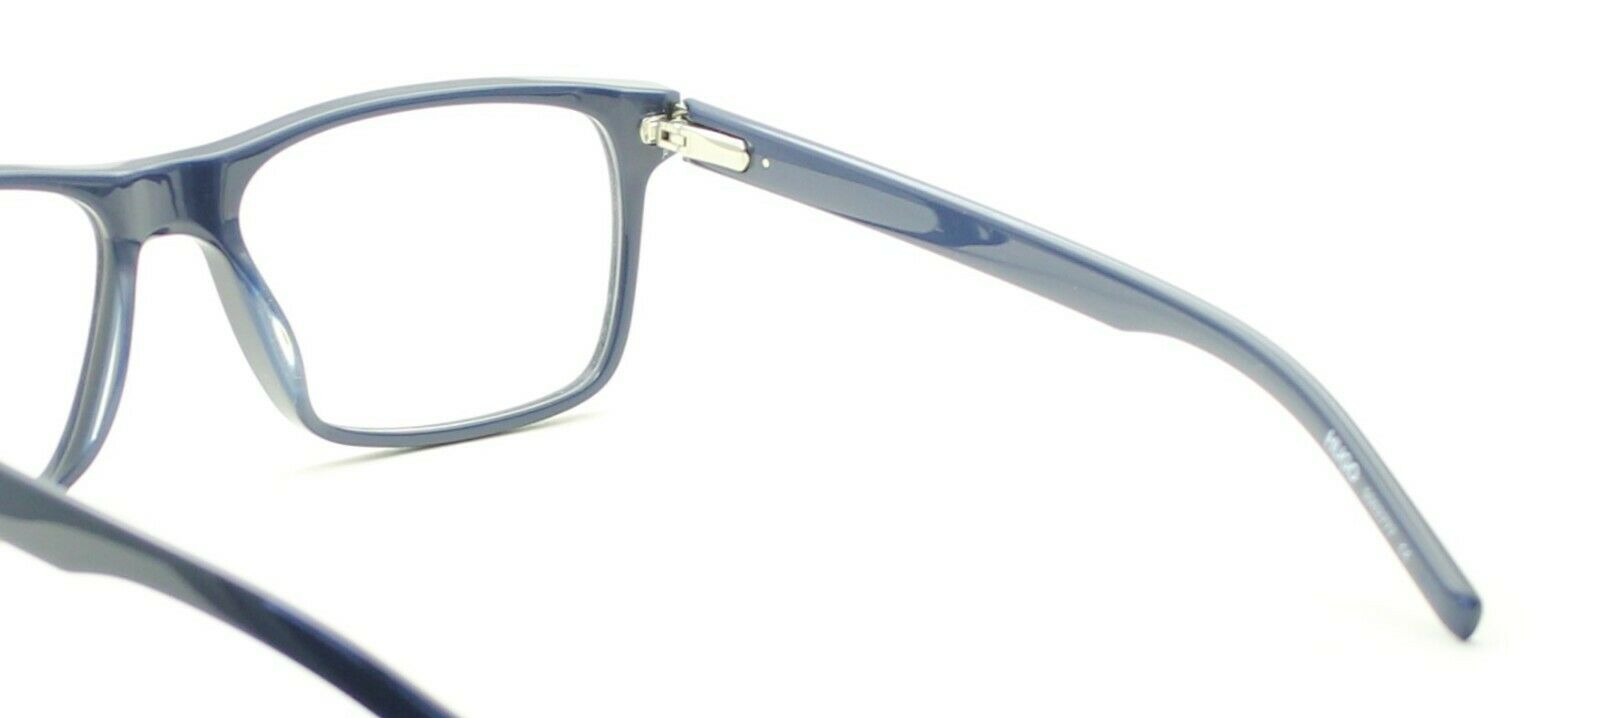 HUGO BOSS HG 03 Blue 54mm Eyewear FRAMES Glasses RX Optical Eyeglasses - Italy